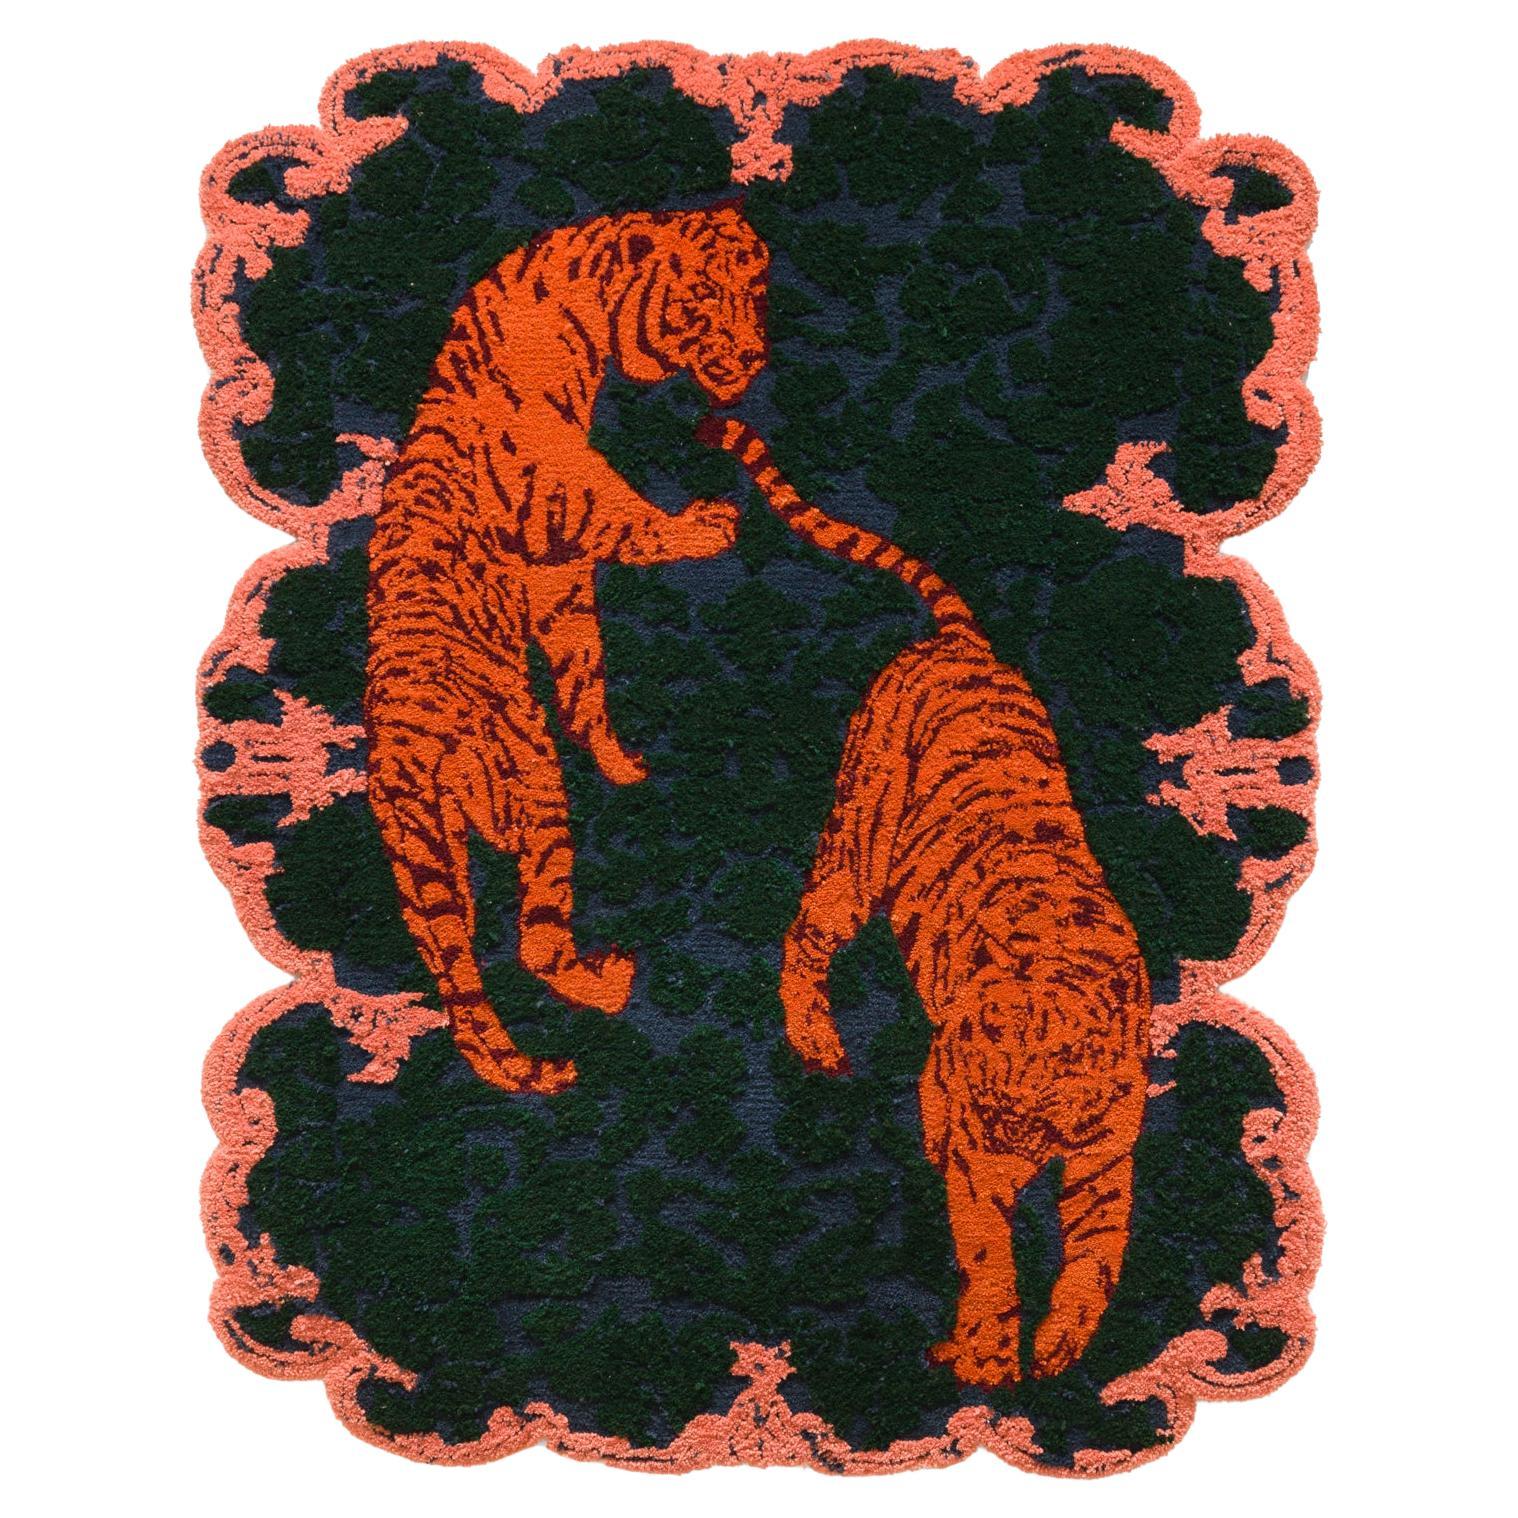 Tapis tigre orange, bleu, vert et rose, collaboration d'artiste et d'atelier